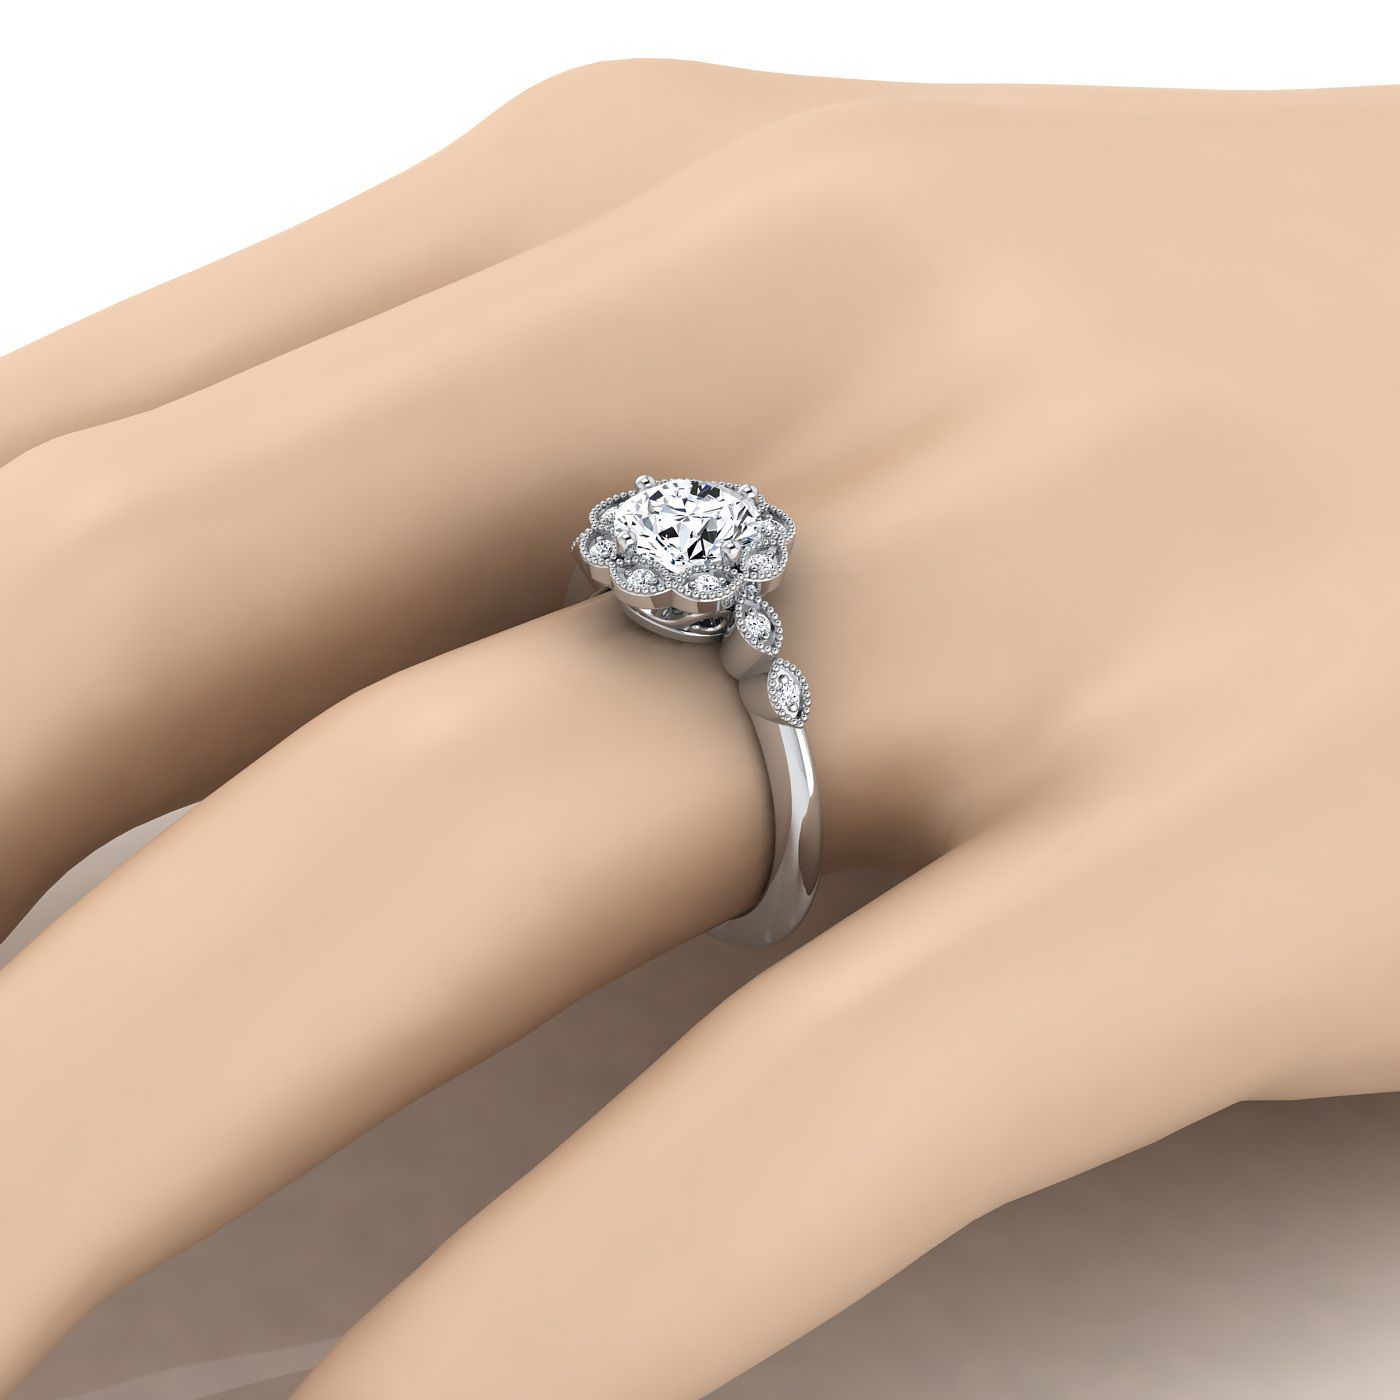 14K White Gold Round Brilliant Pink Sapphire Ornate Diamond Halo Vintage Inspired Engagement Ring -1/3ctw